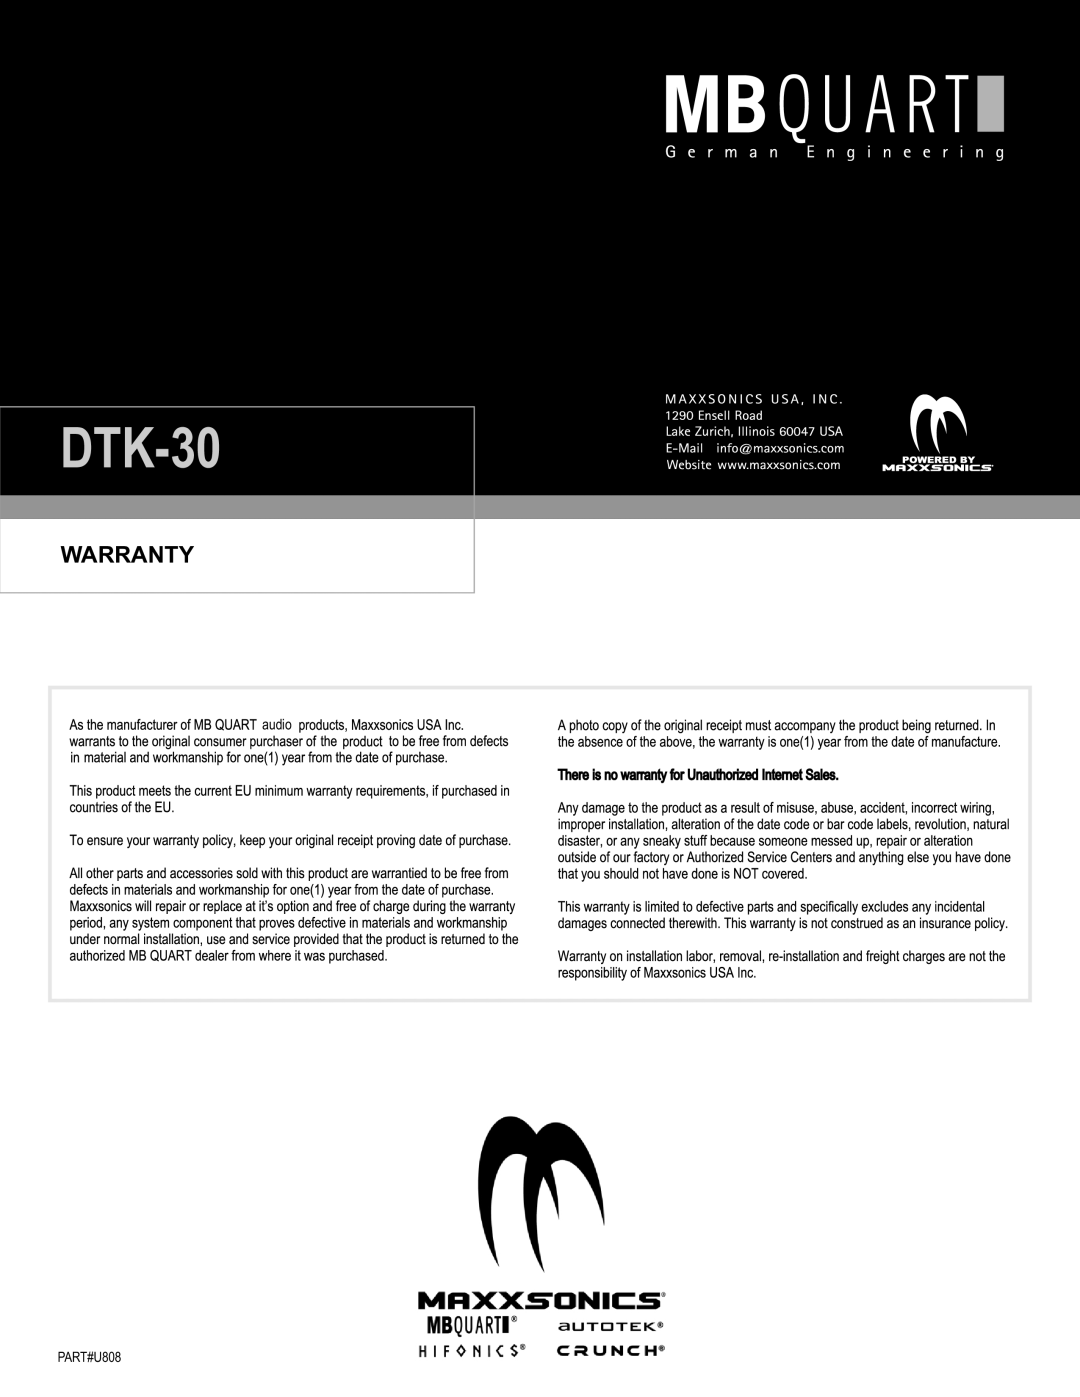 MB QUART DTK-30 installation manual Warranty, audio, PART#U808 